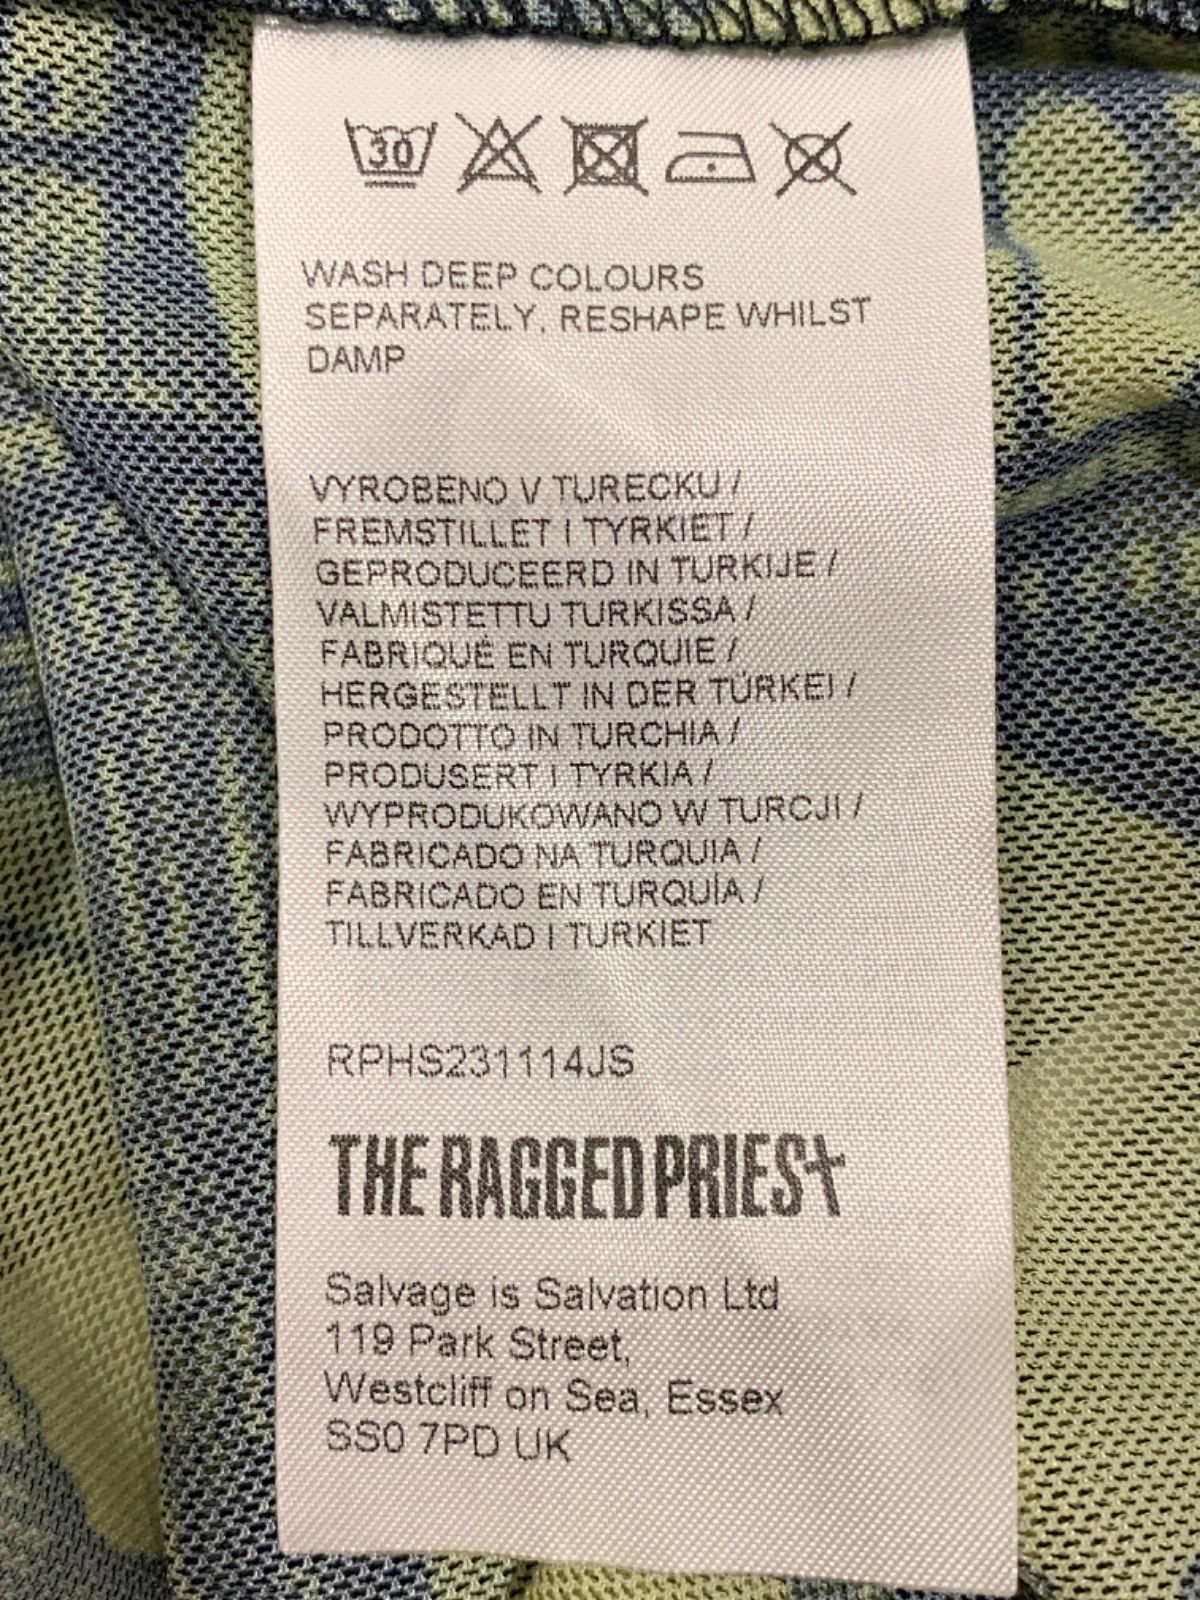 The Ragged Priest Green Sheer Maxi Dress UK 6